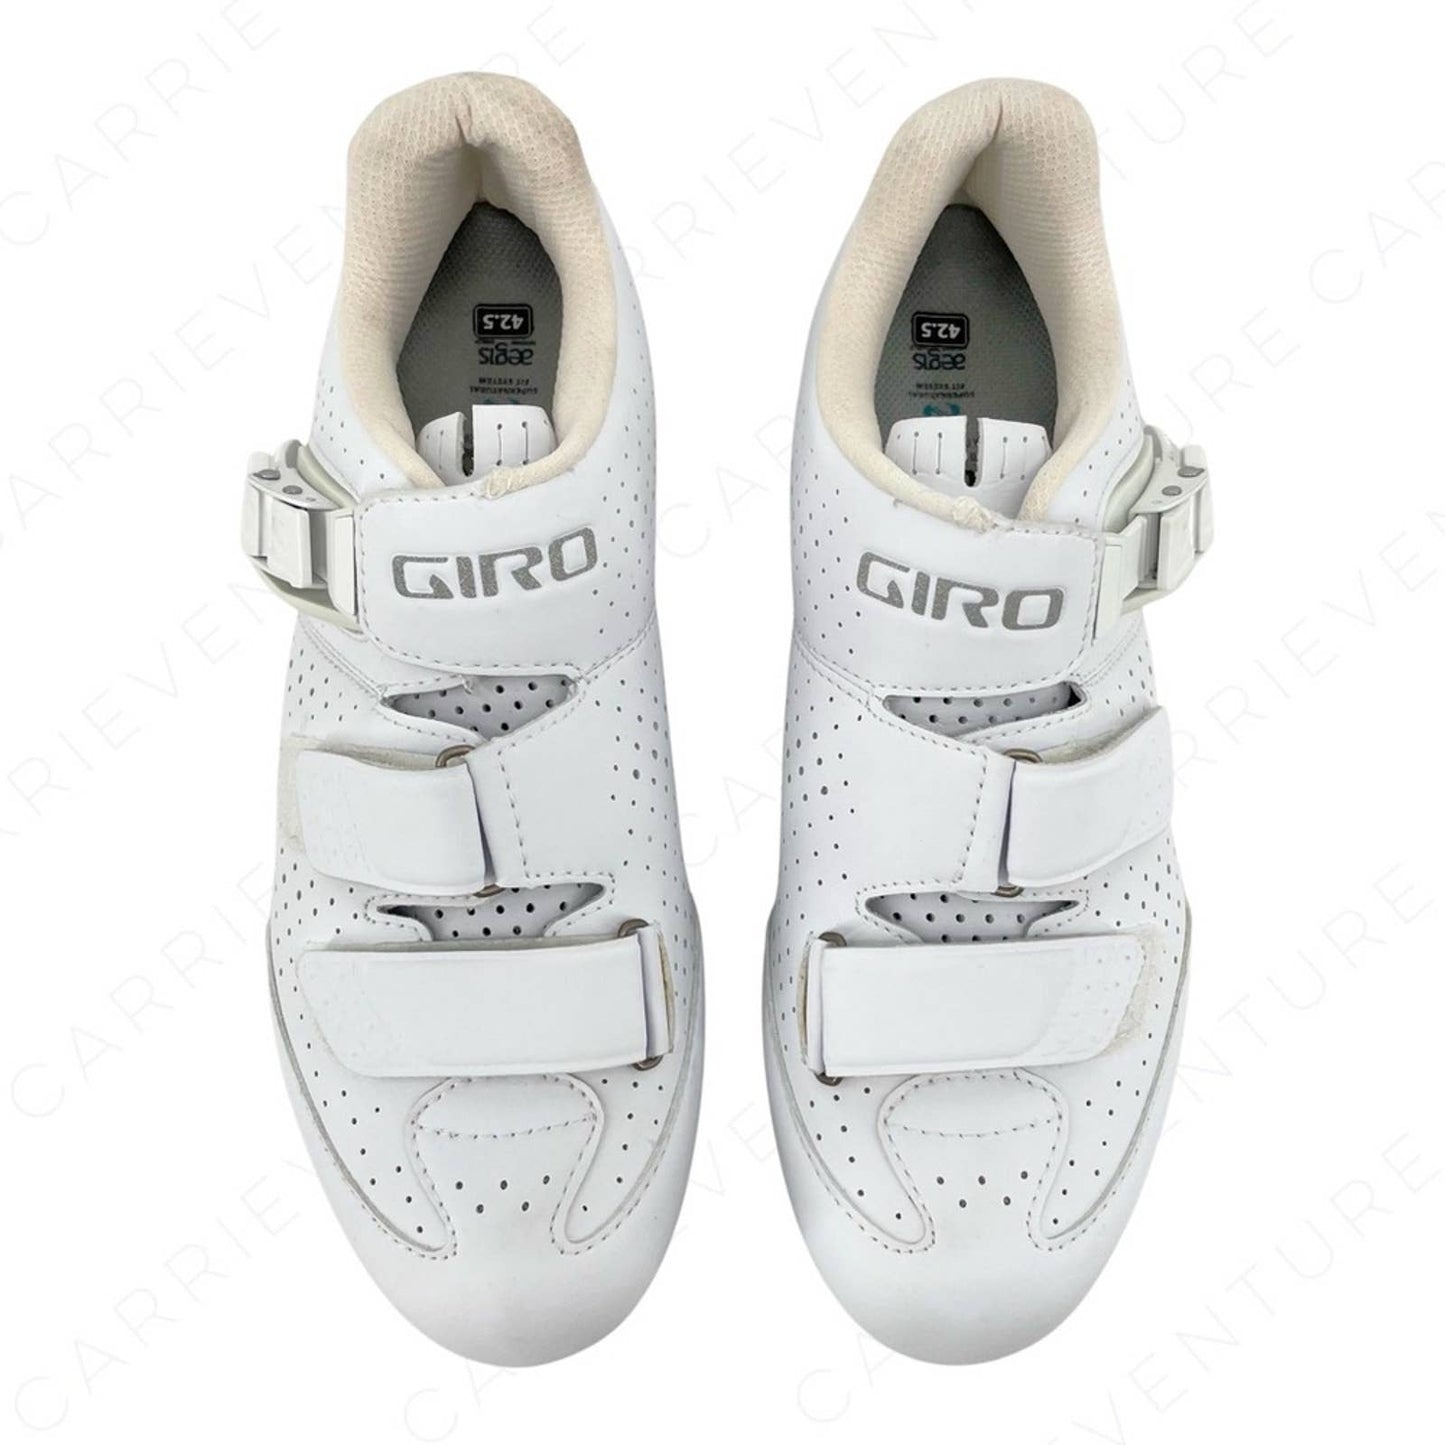 Giro ESPADA E70 Road Cycling Shoe Matte White Delta 3 Bolt Style Peloton Size 42.5